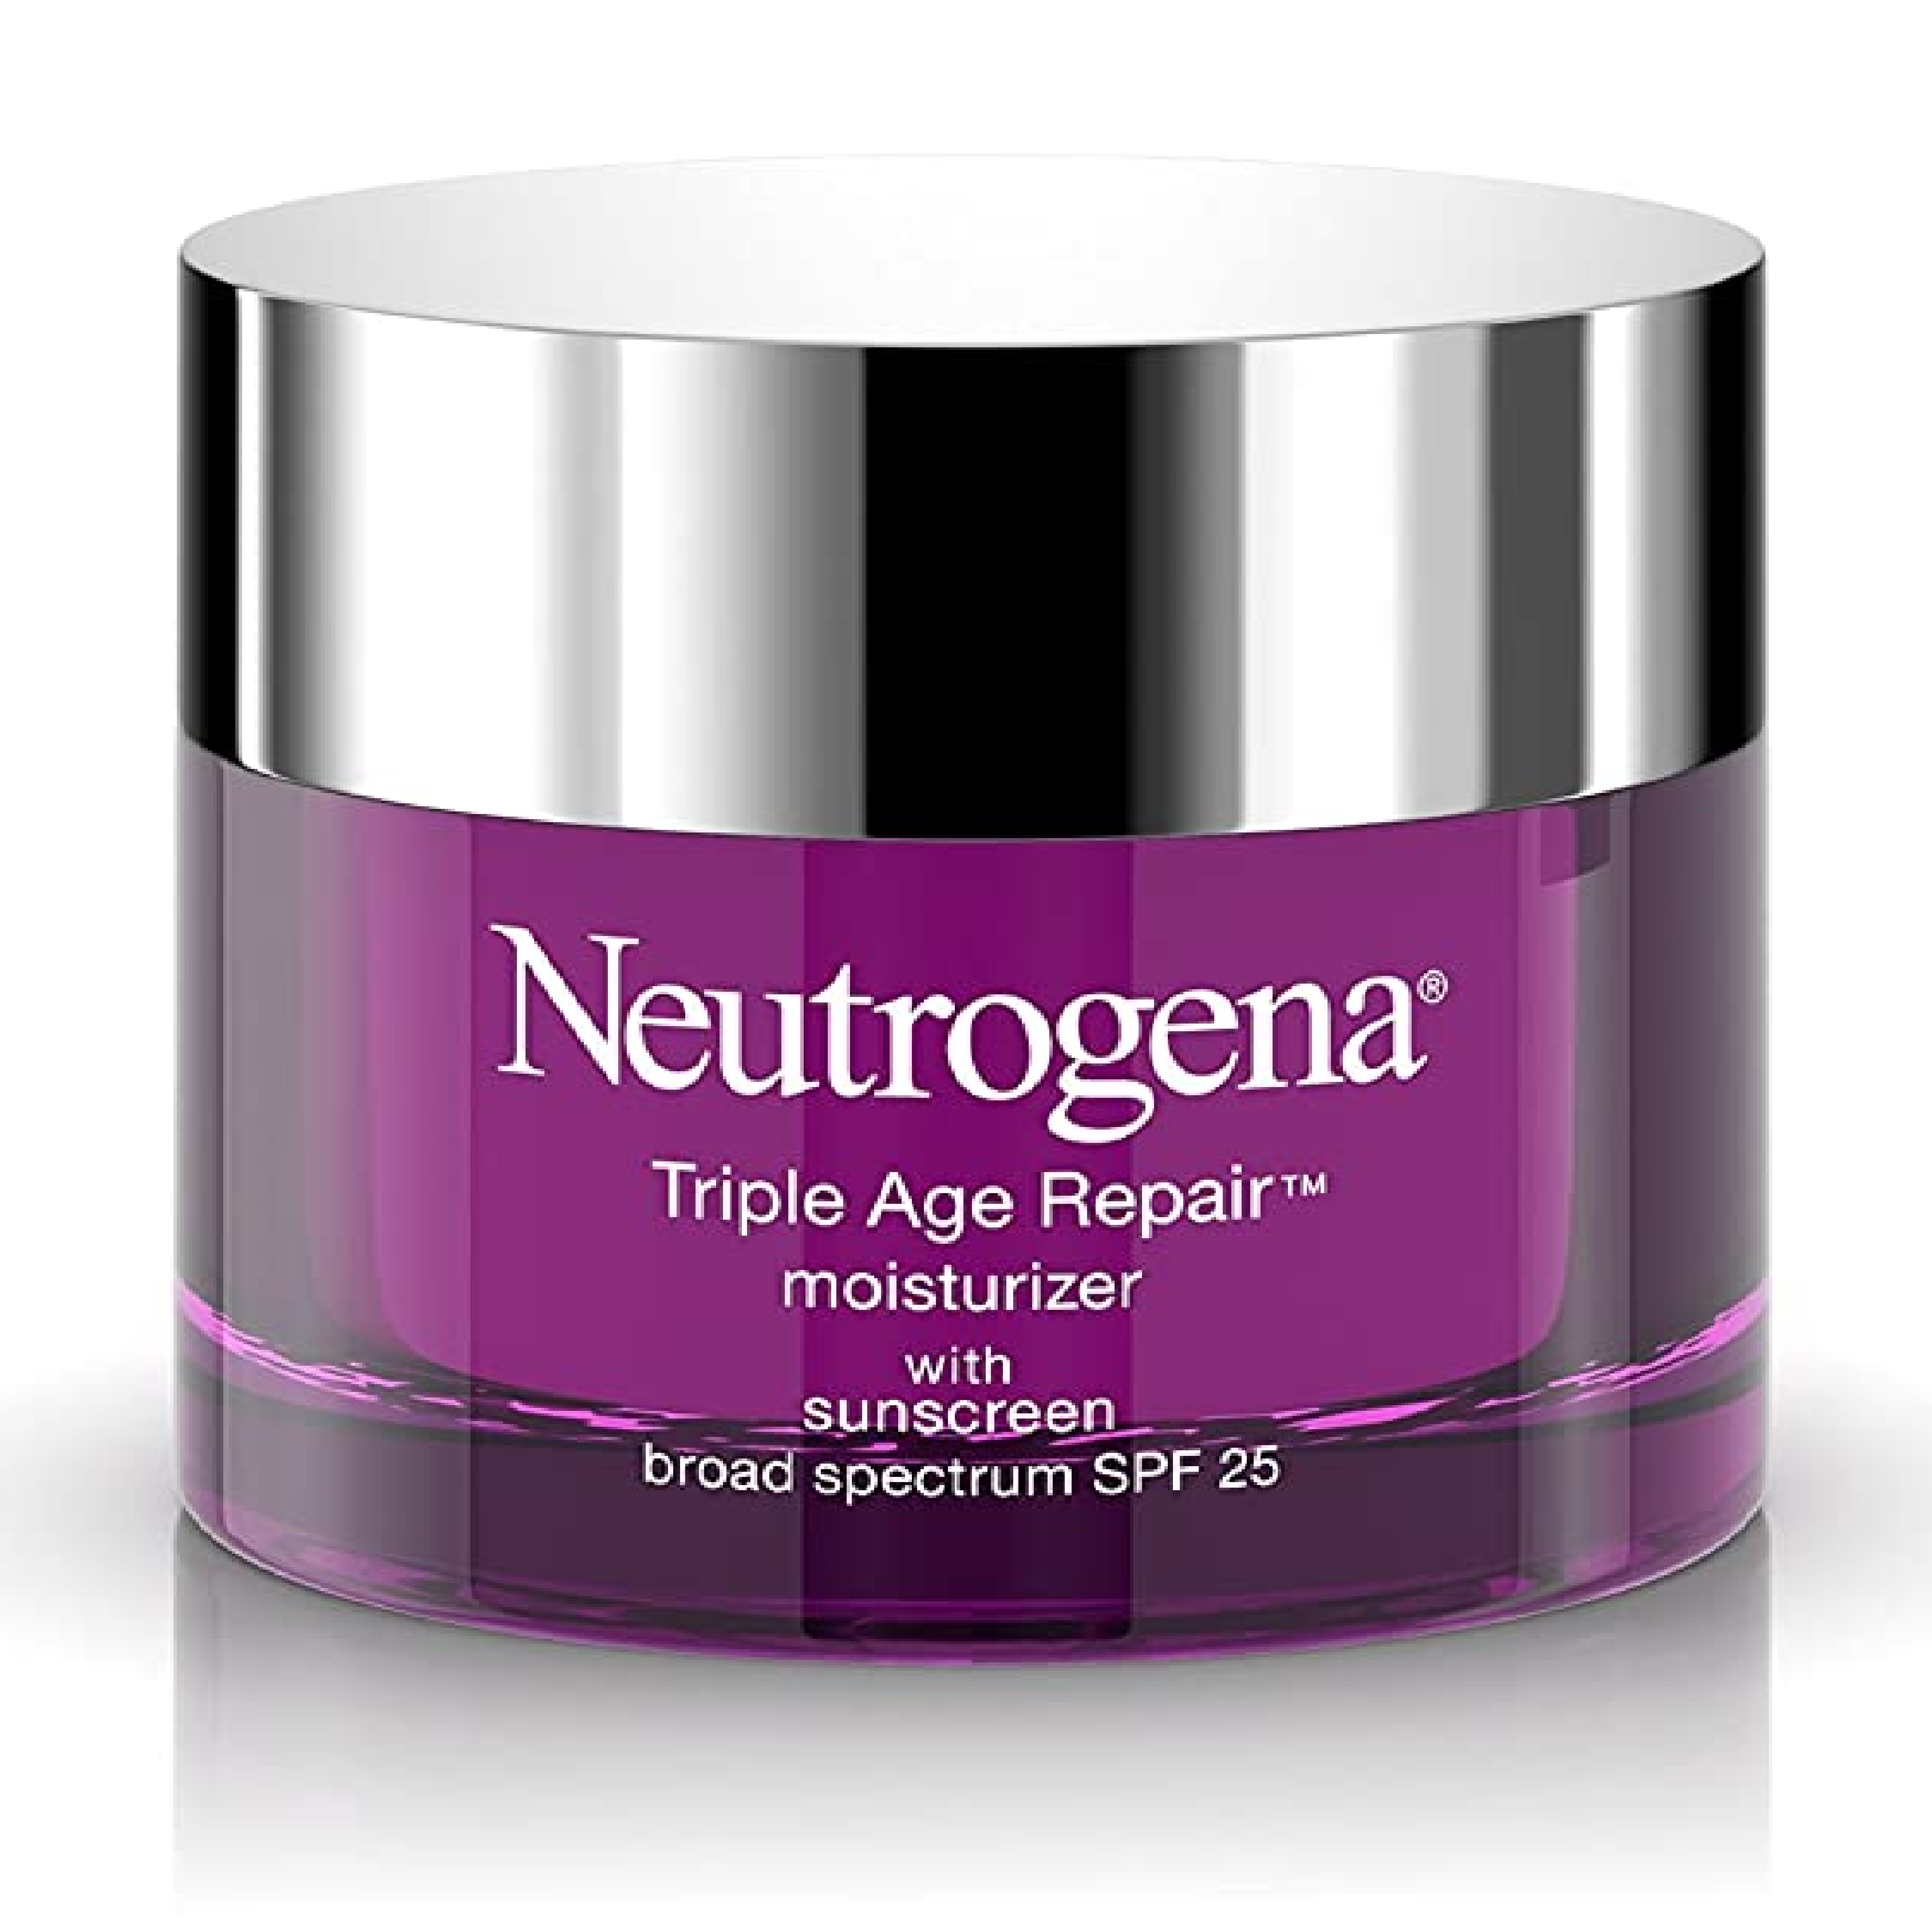 Neutrogena Triple Age Repair Anti-Aging Daily Facial Moisturizer with SPF 25 Sunscreen